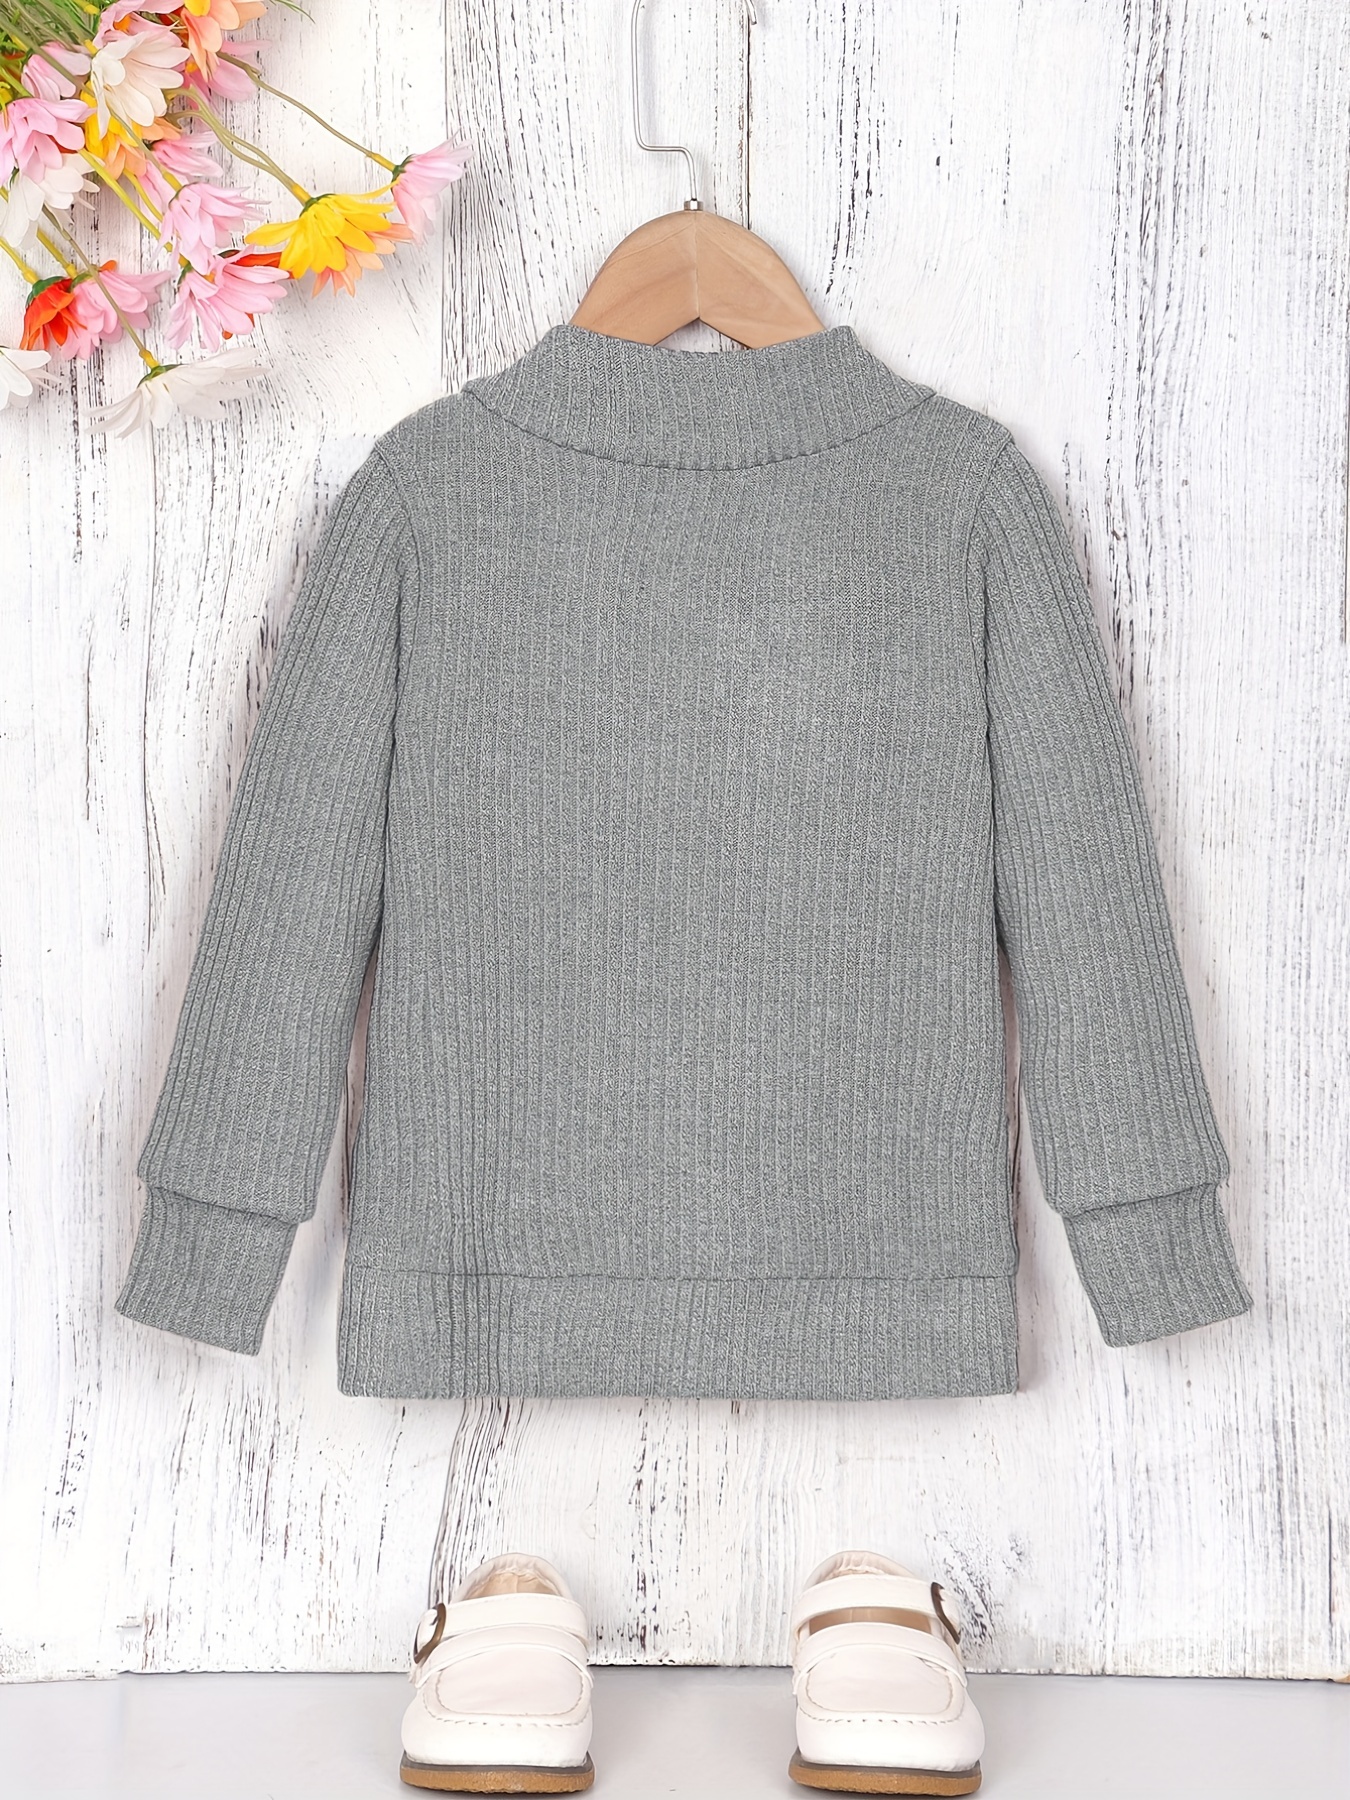 G12-Matilda Jane, 4Y, l/s cotton sweater cardigan - Thread